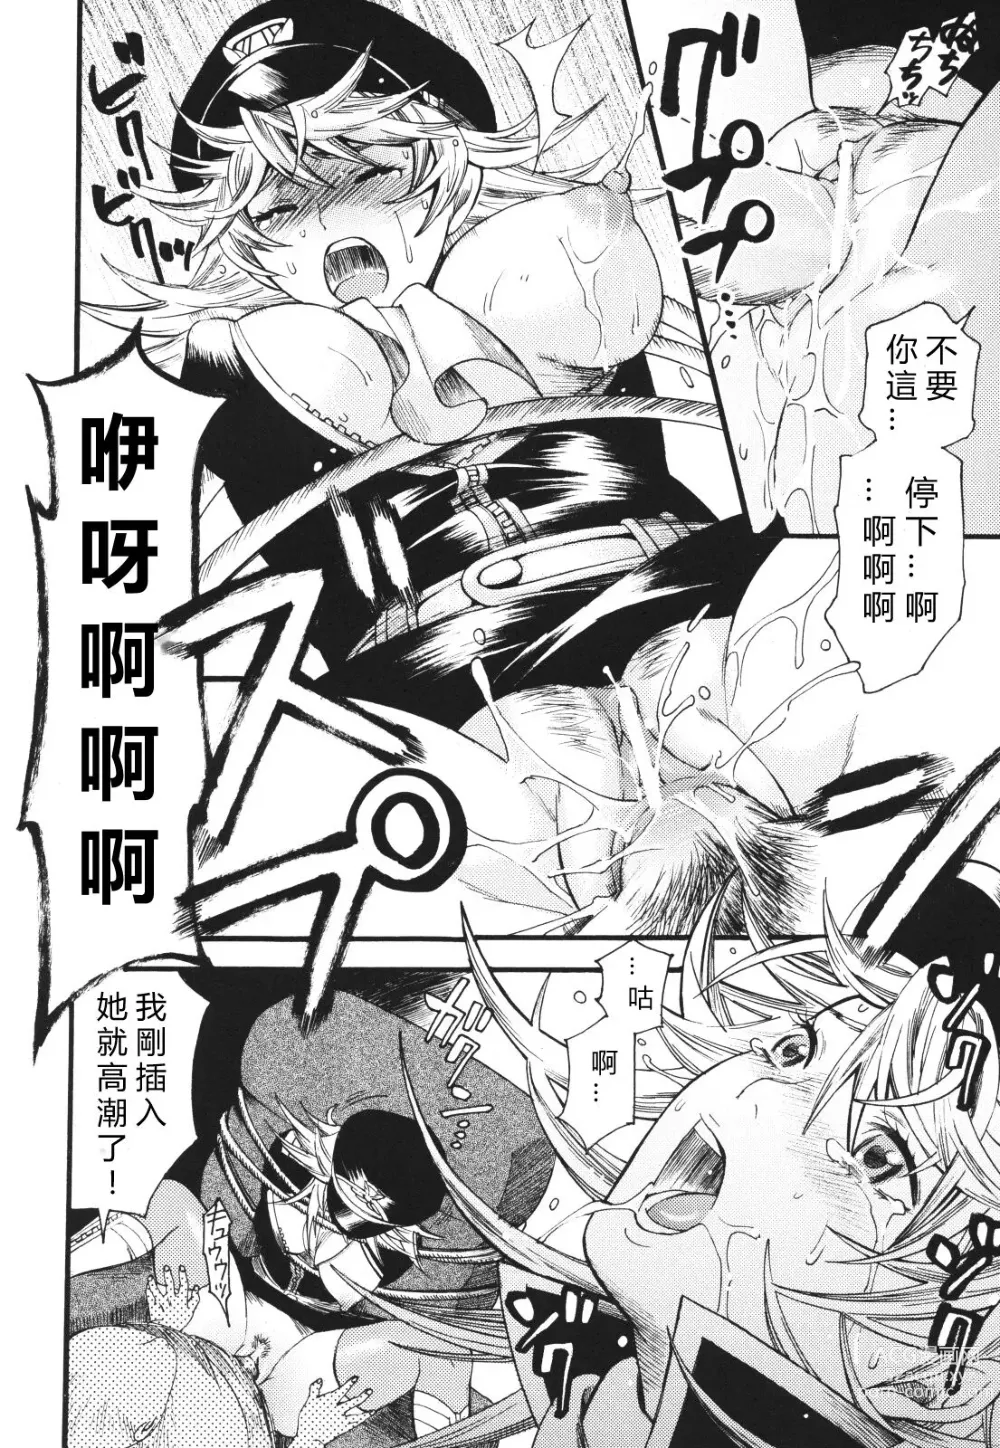 Page 8 of manga Yokubou Junkie